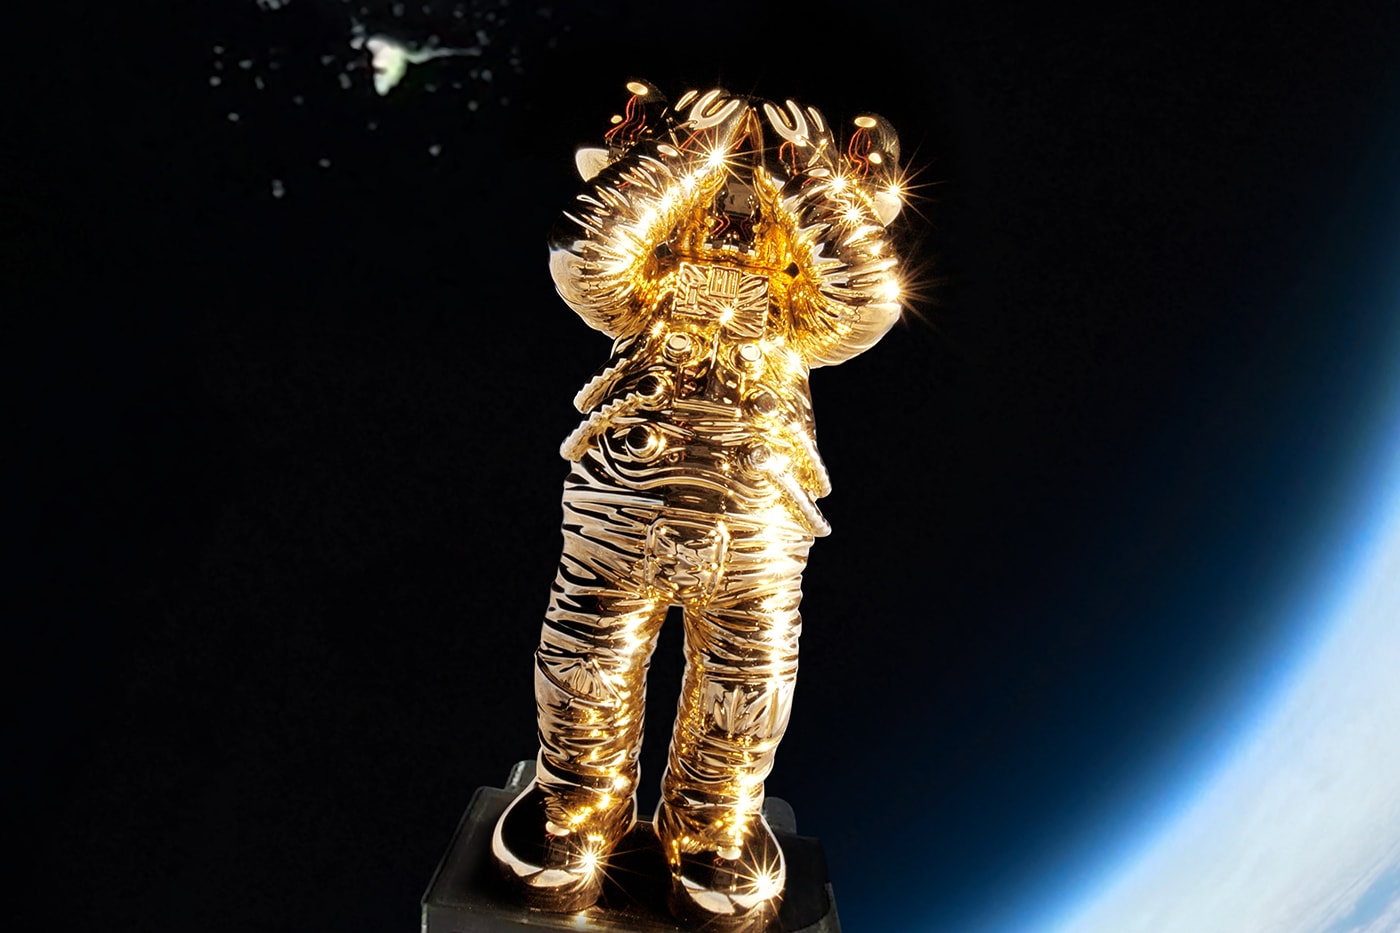 «KAWS:HOLIDAY SPACE» Companion AllRightsReserved, коллекционная фигурка космонавта размером 11,5 дюймов, три цвета: золото, серебро, черный